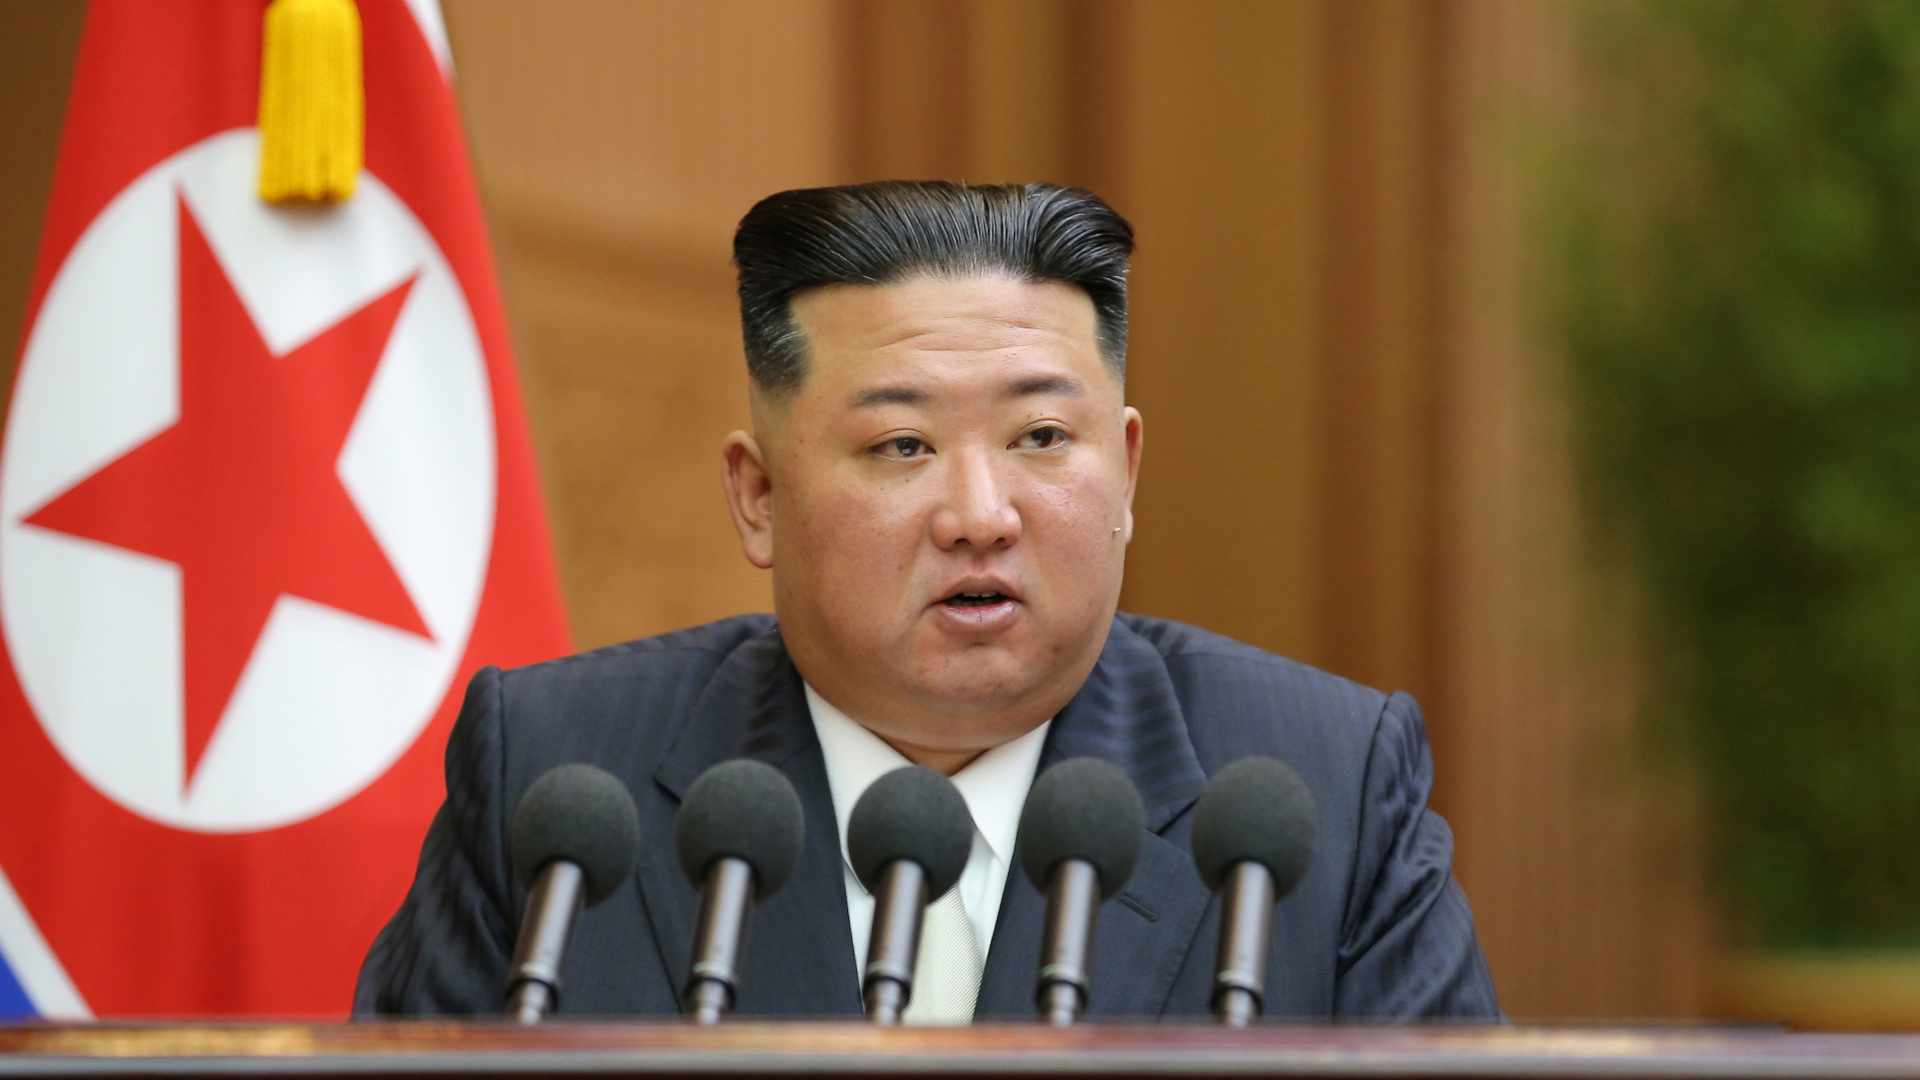 Nordkoreas Machthaber Kim Jong Un hält eine Rede | EPA